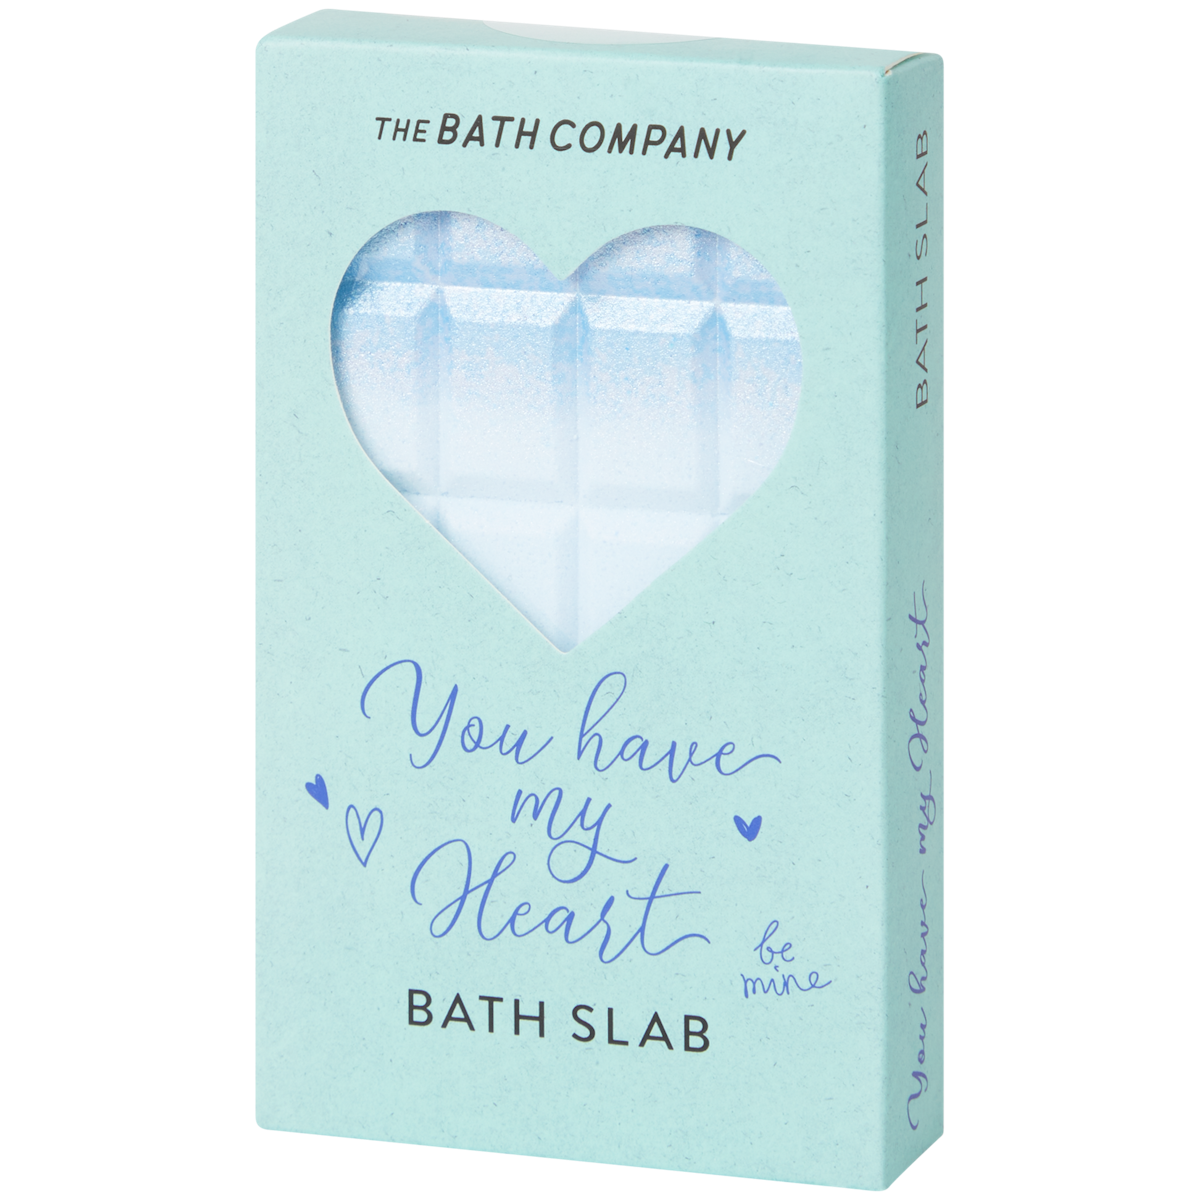 Bomba de baño The Bath Company